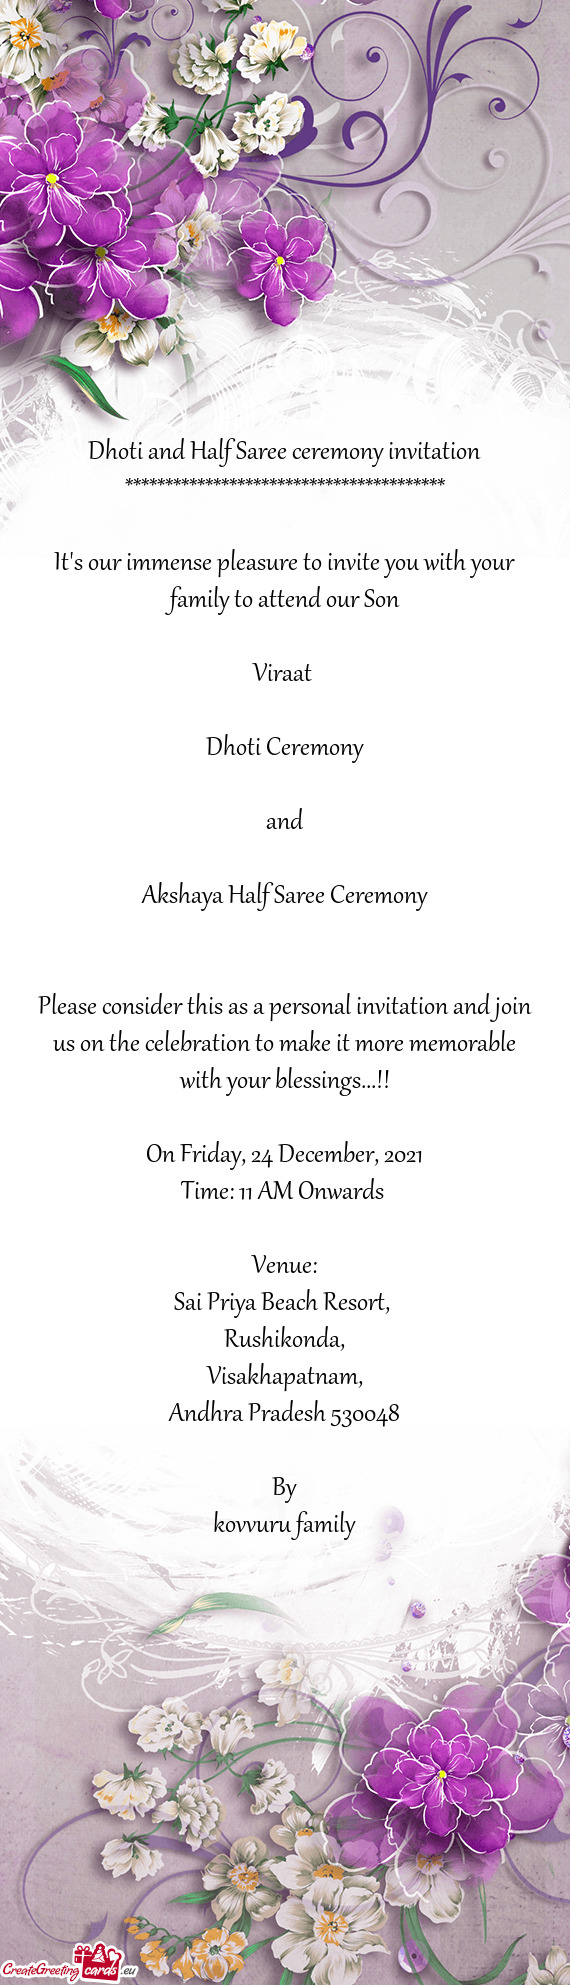 Akshaya Half Saree Ceremony